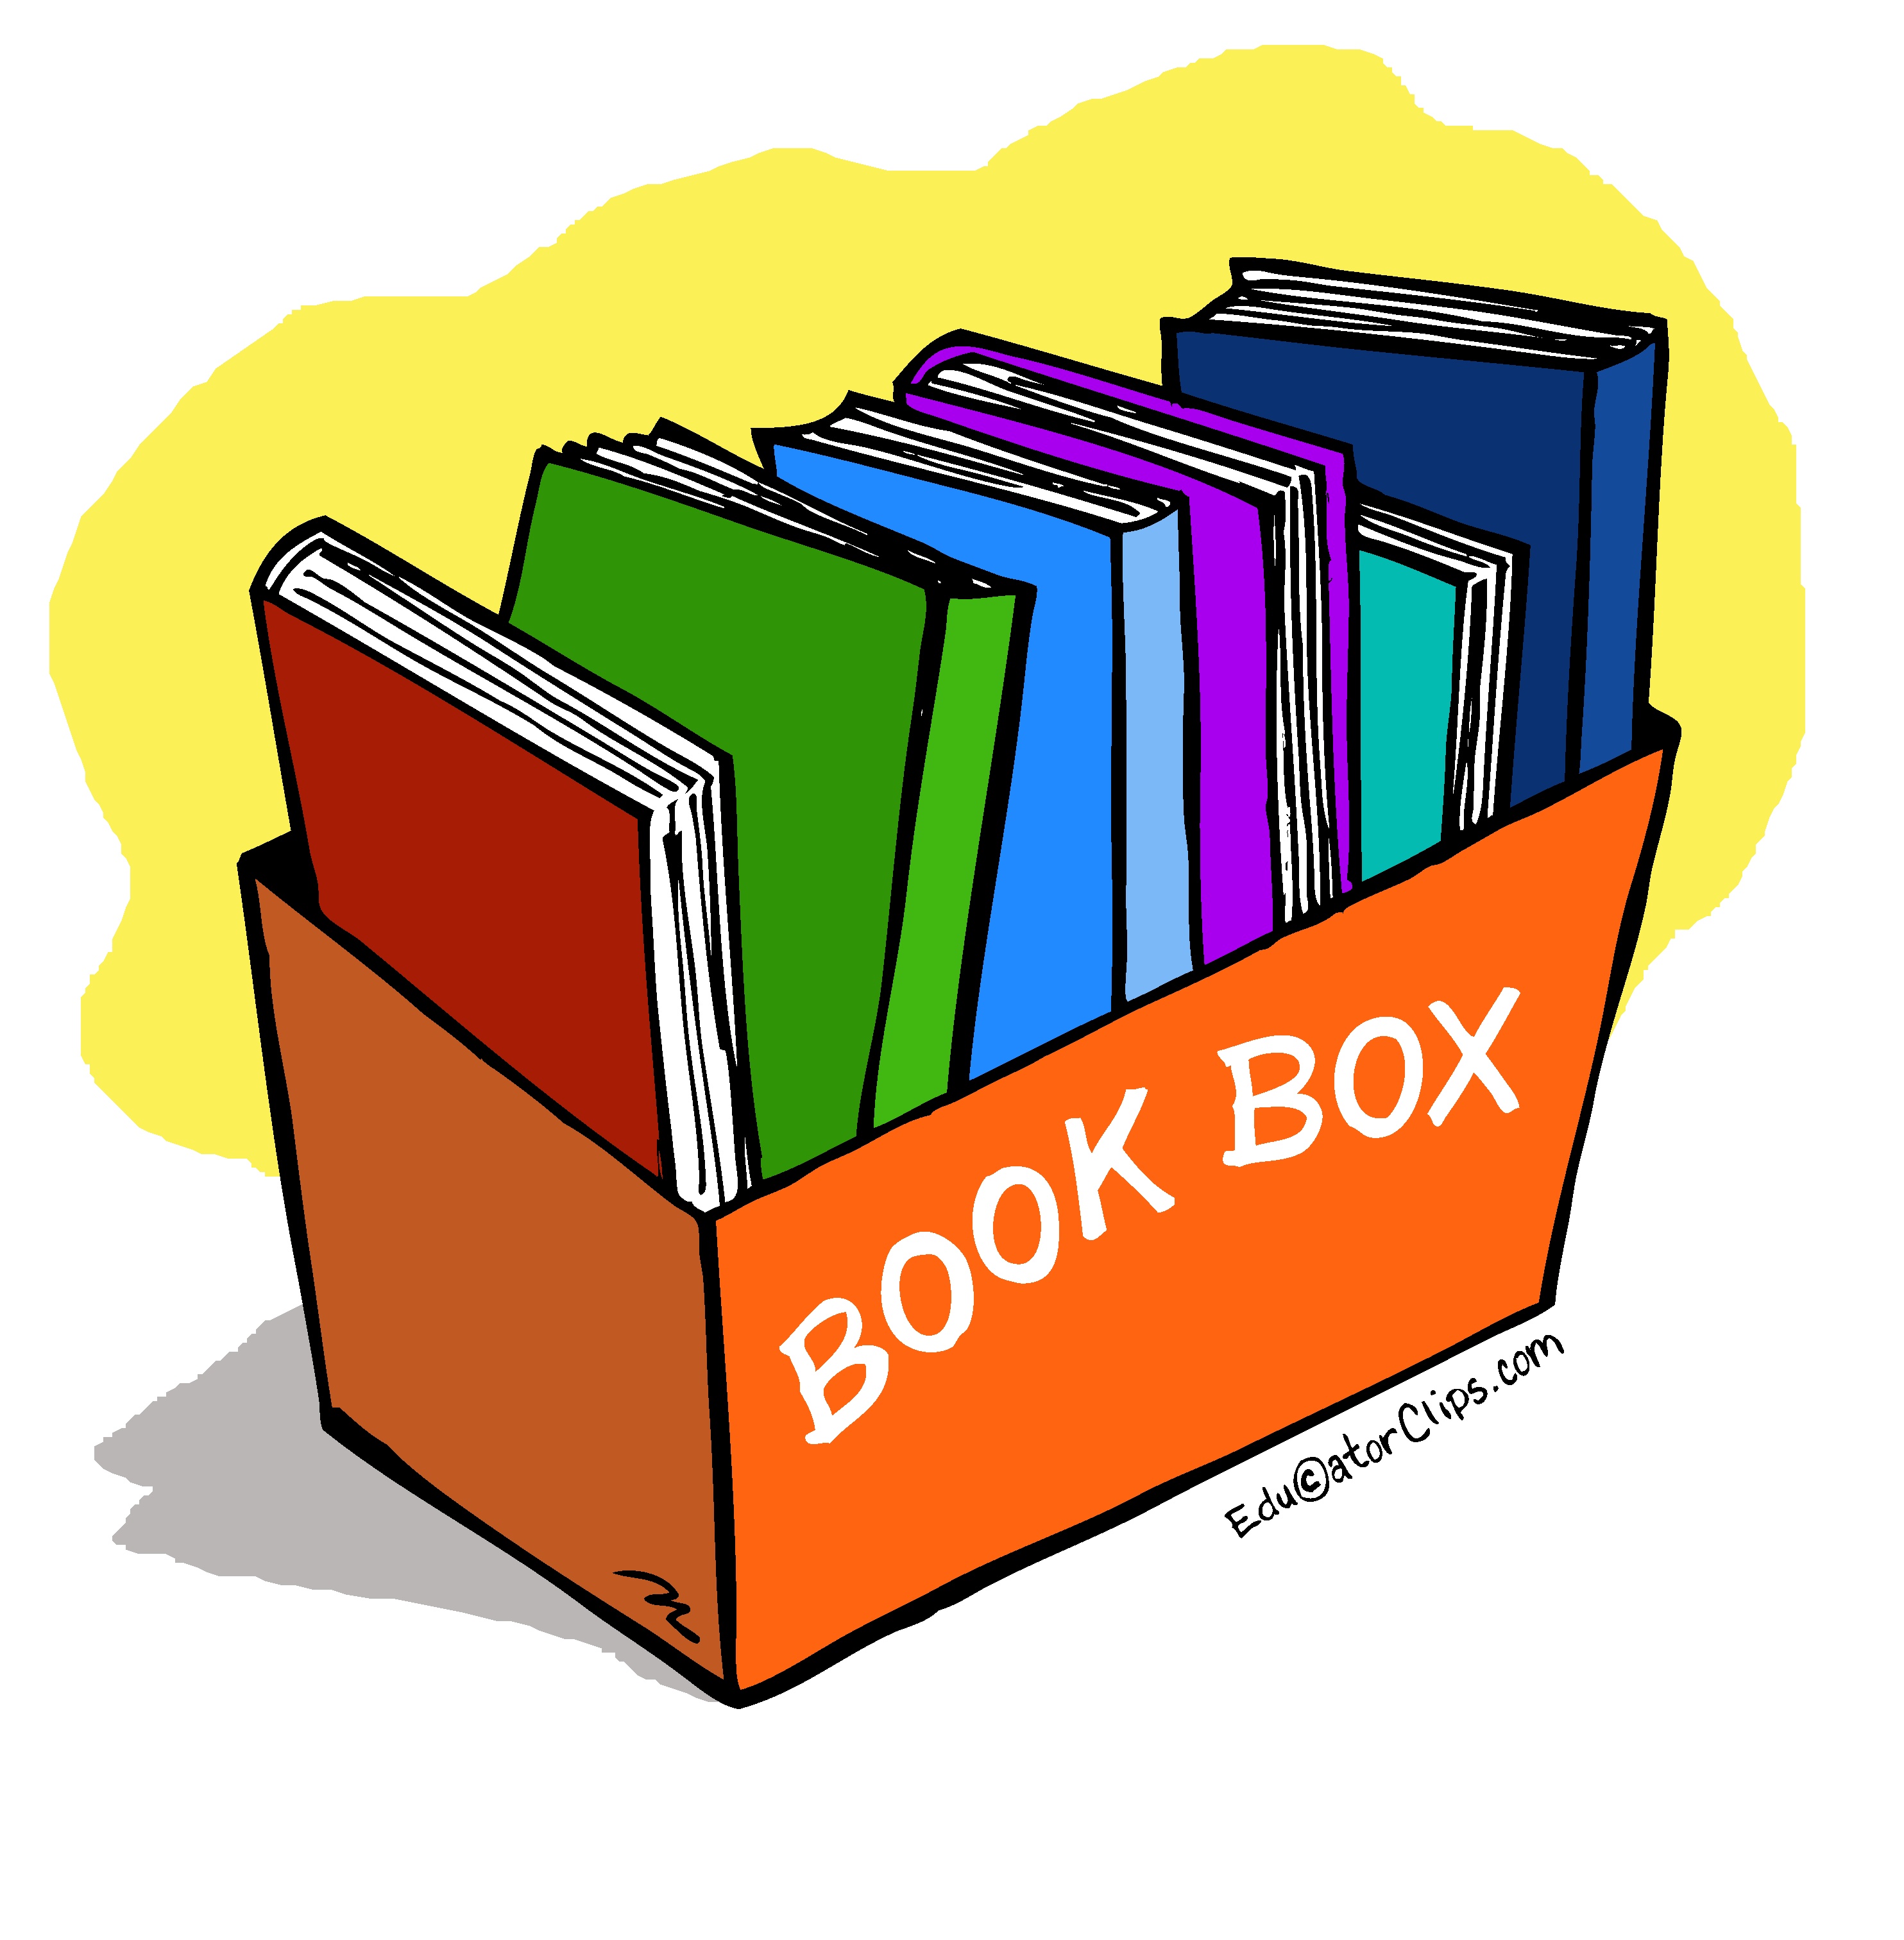 manuscript book and box